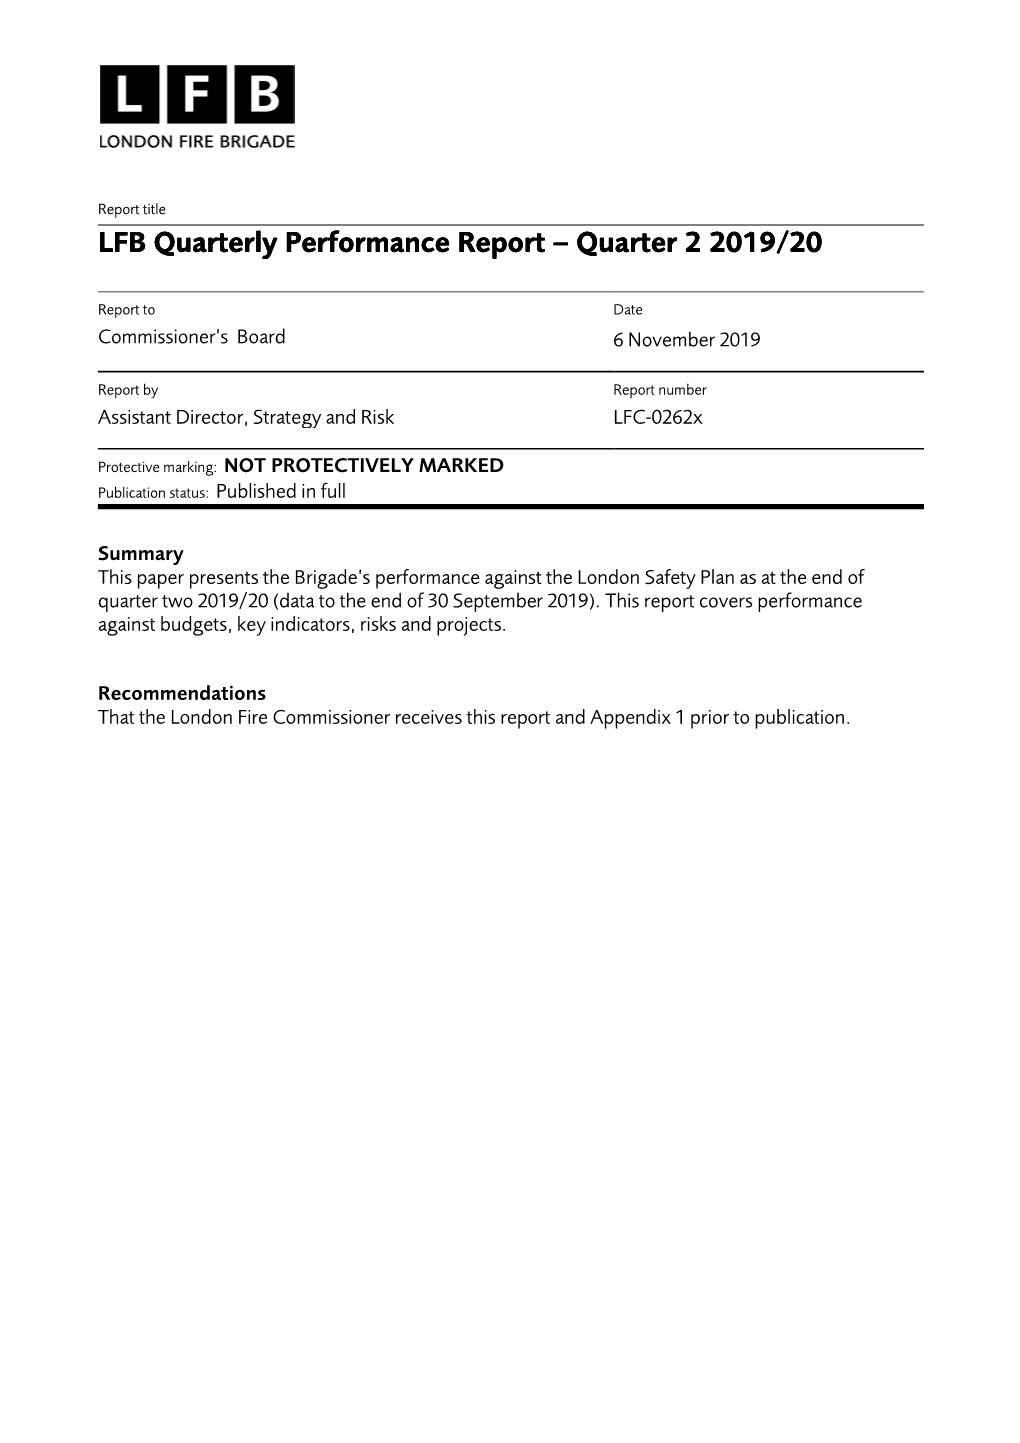 LFB Quarterly Performance Report Uarterly